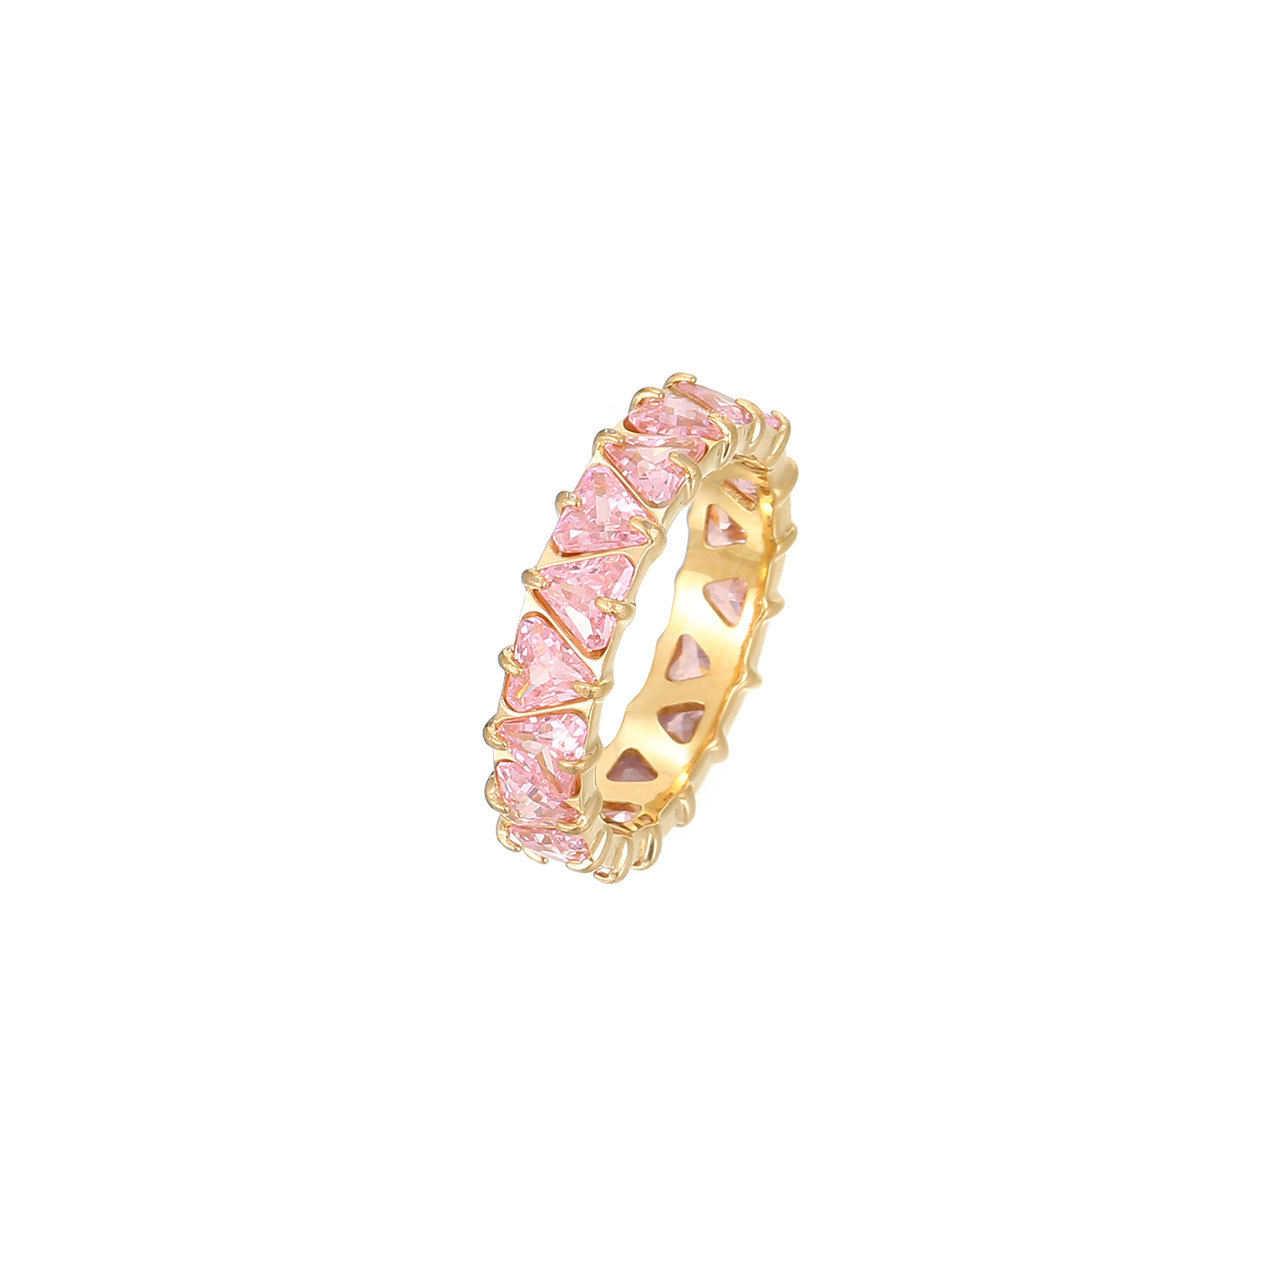 3:Gold - pink zircon